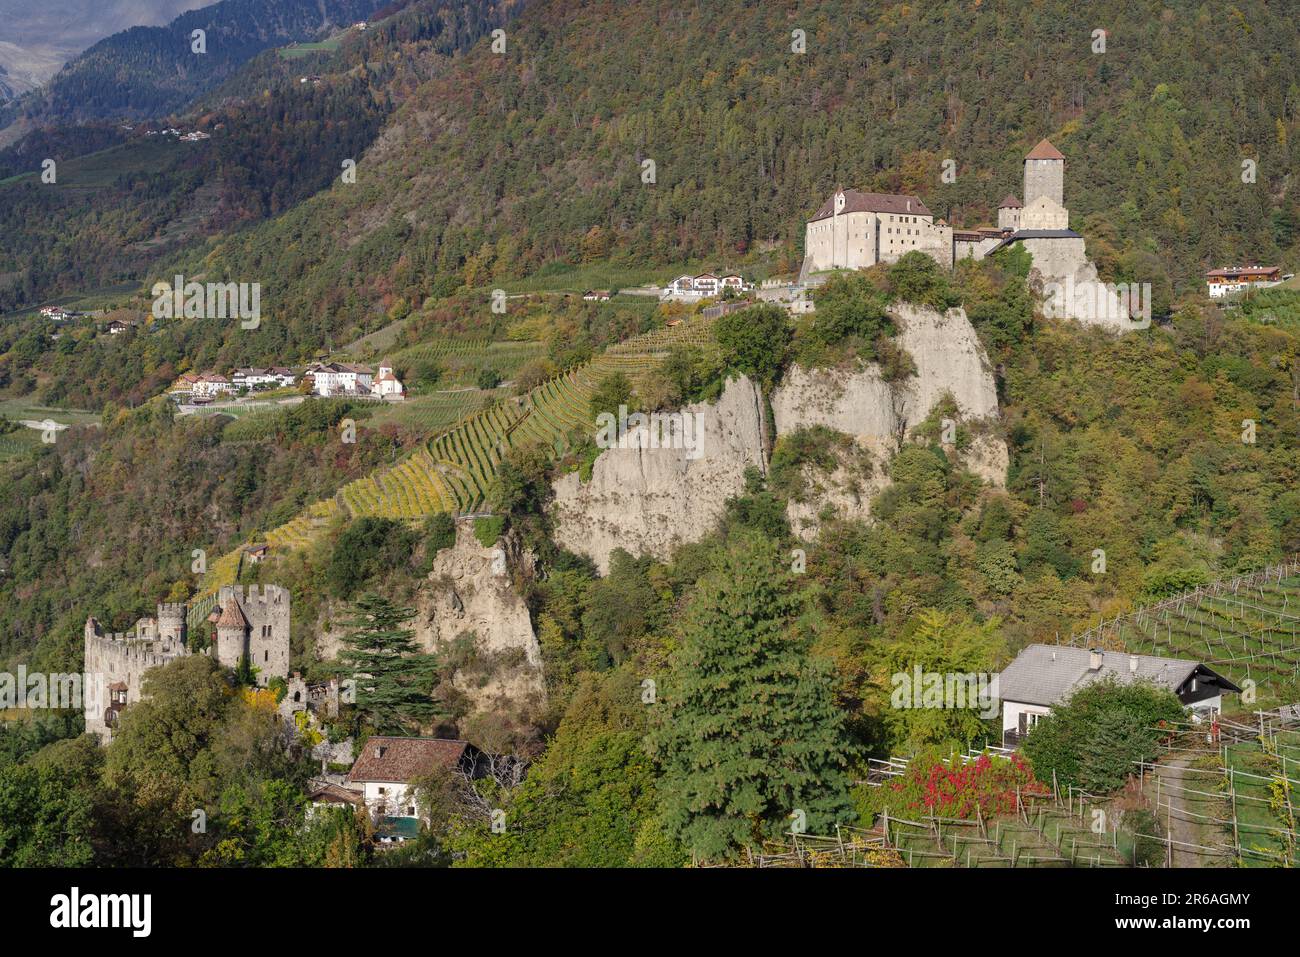 View of Tyrol Castle and Castel Fontana (Brunnenburg castle), Trentino-Alto Adige, Italy Stock Photo